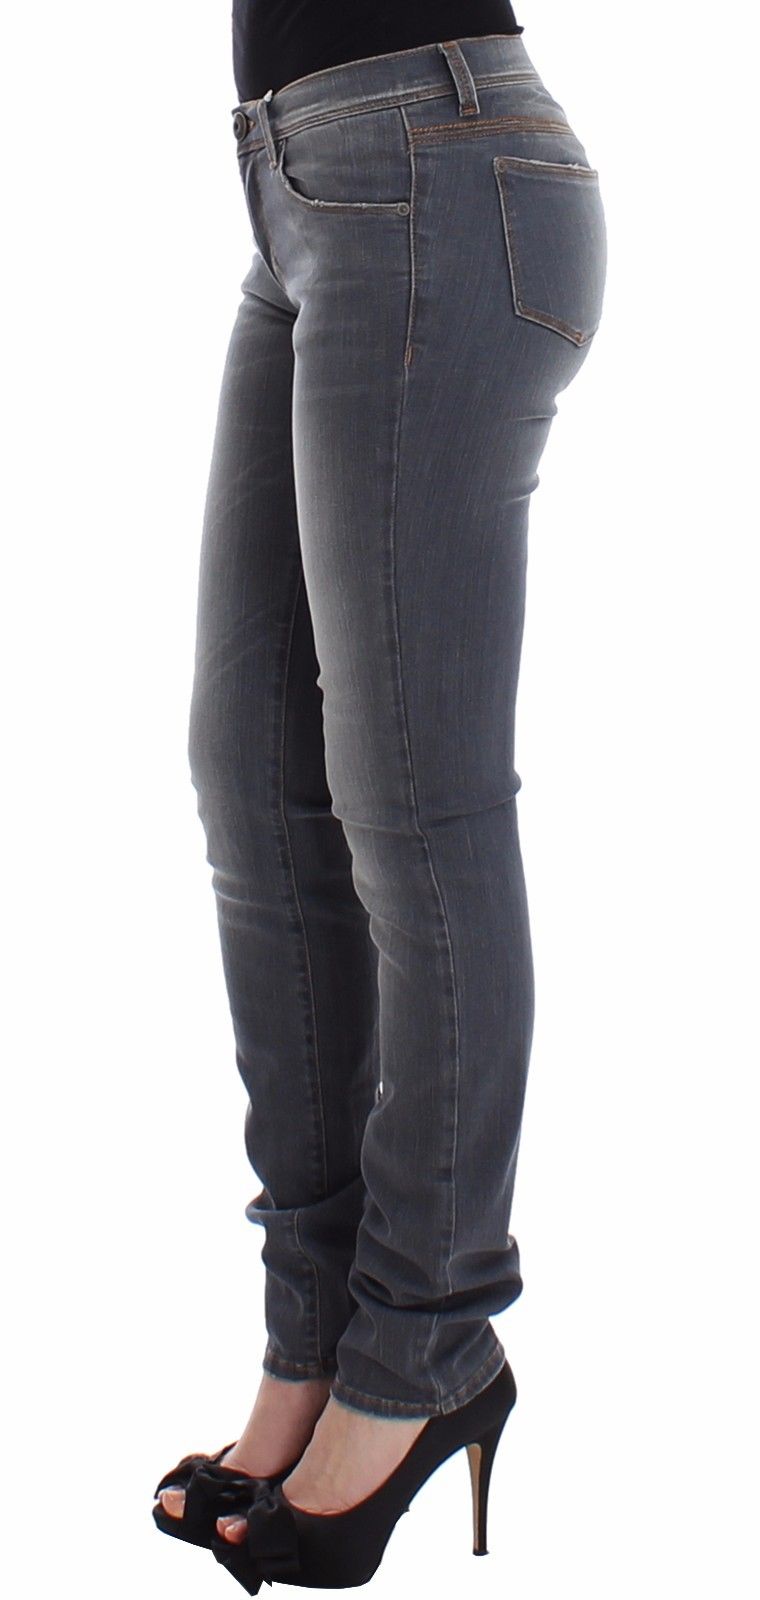 Gray Slim Jeans Denim Pants Skinny Leg Stretch - Avaz Shop